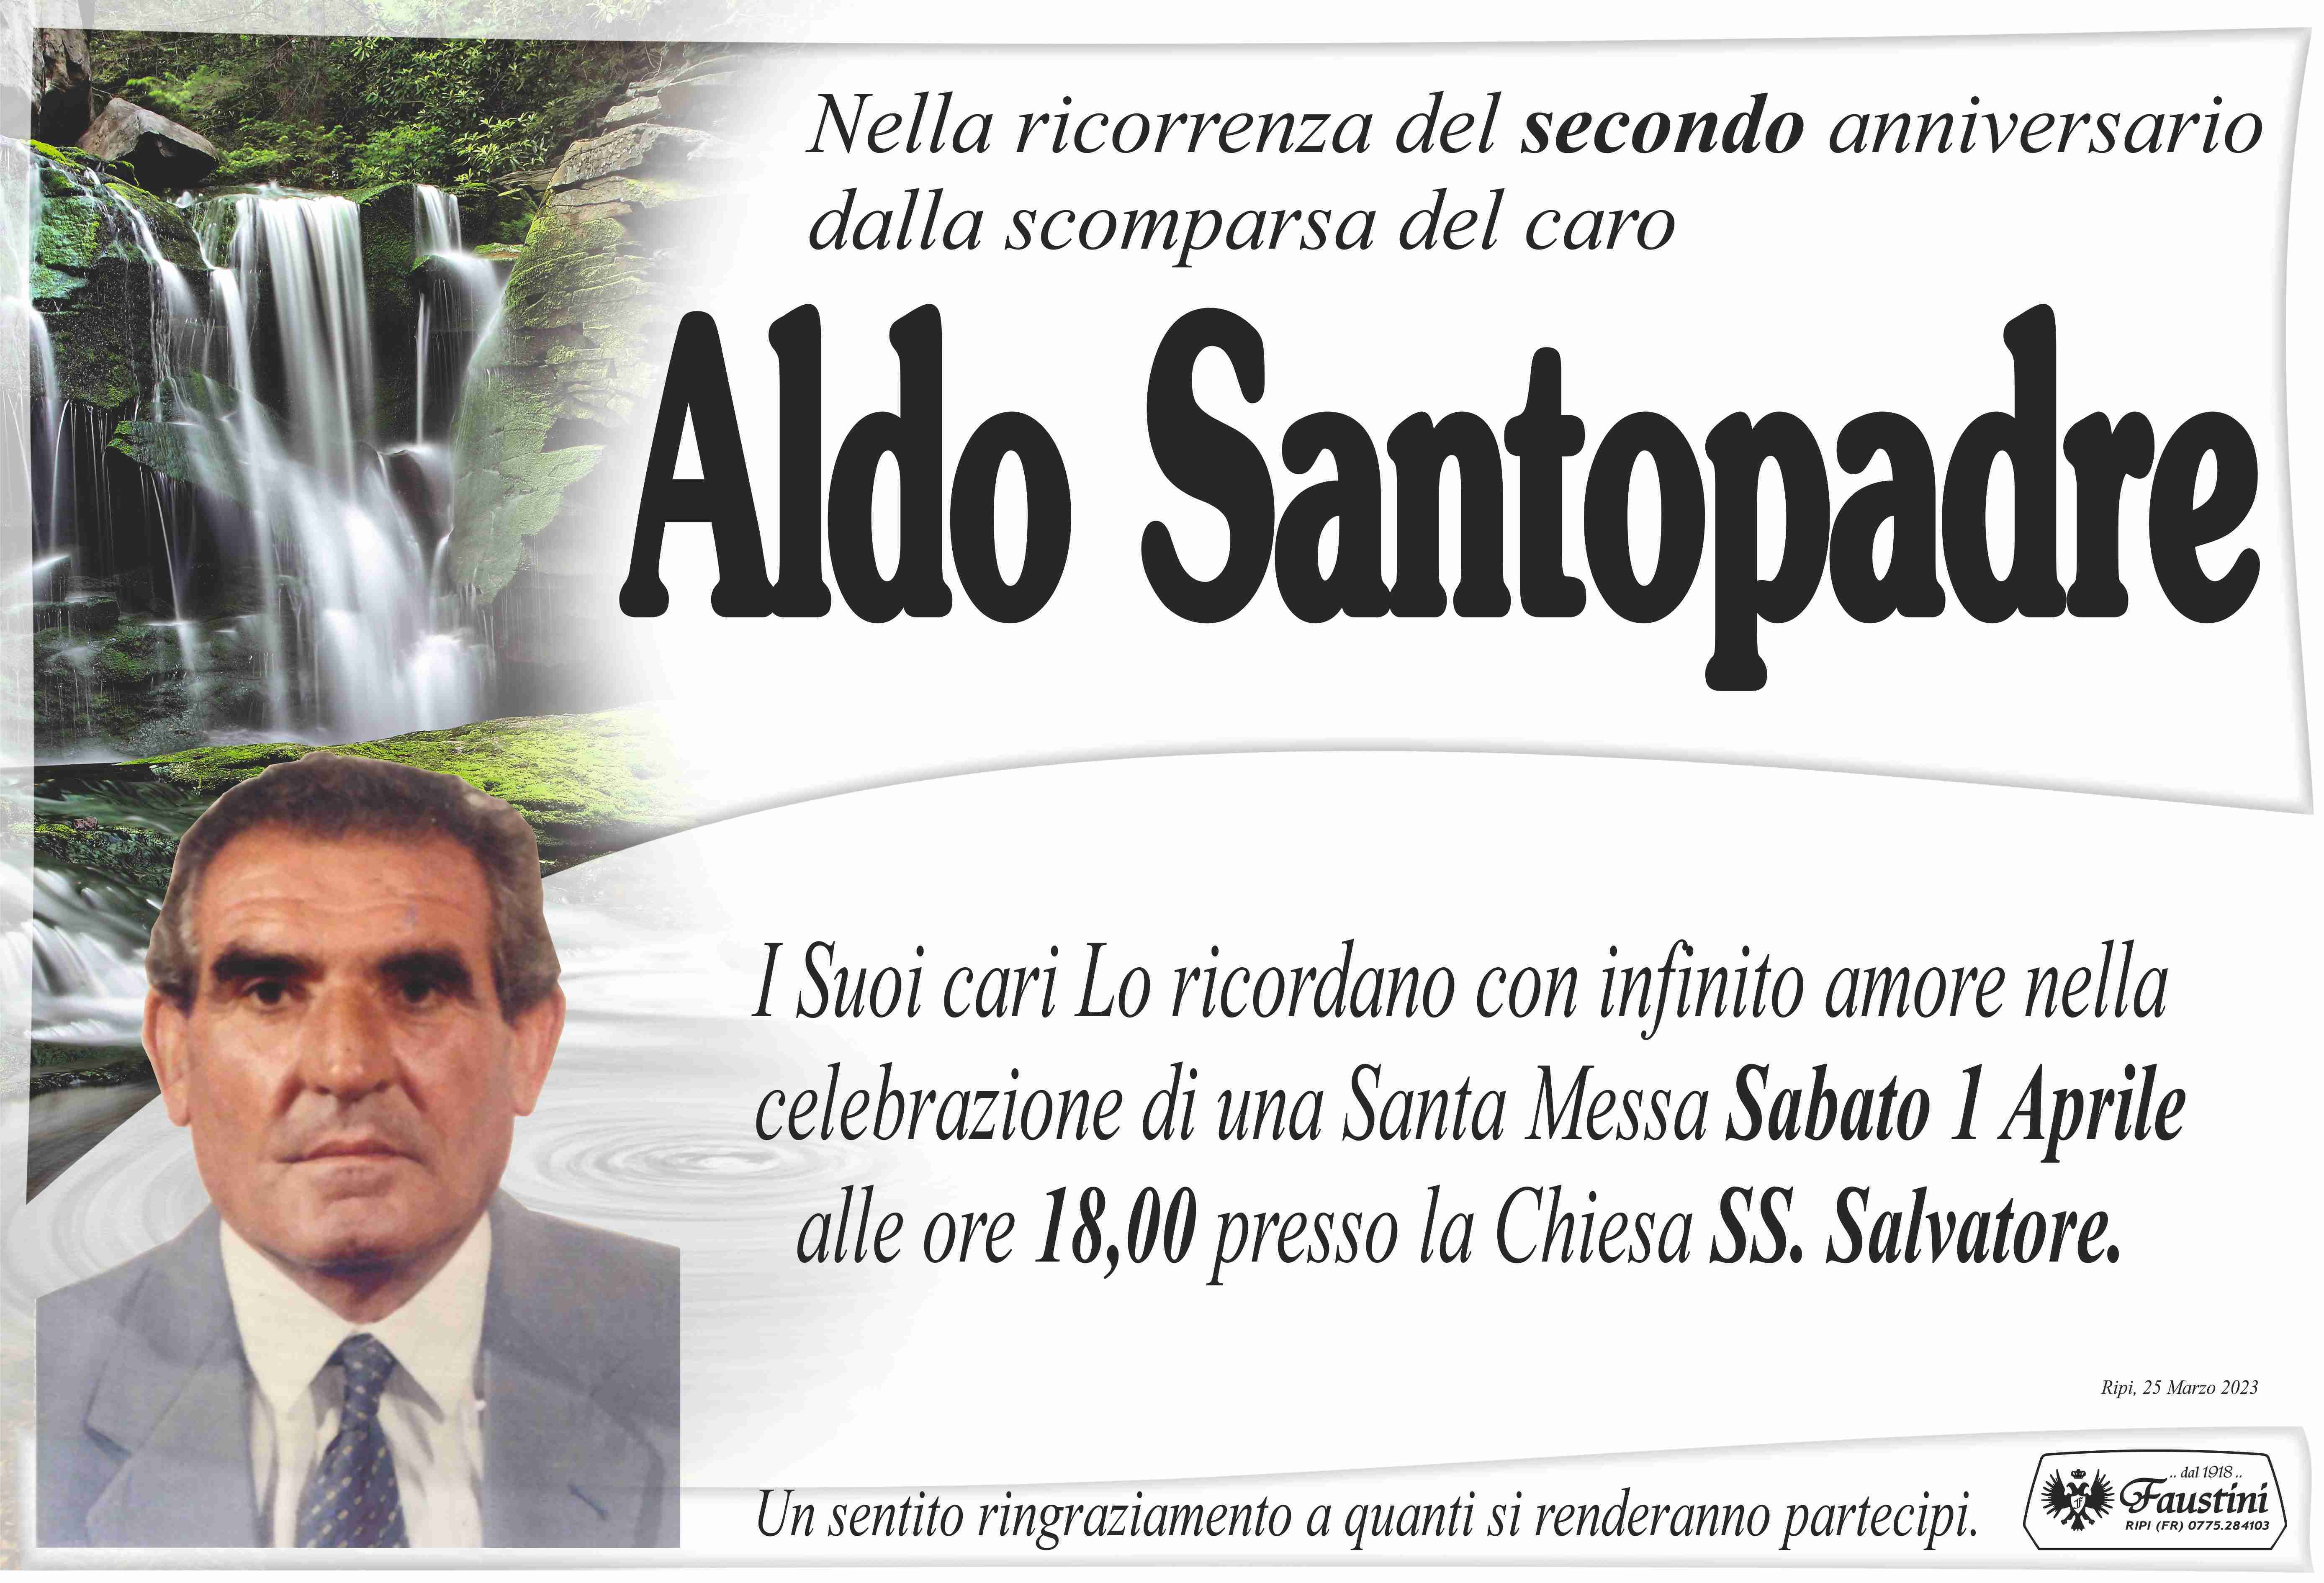 Aldo Santopadre